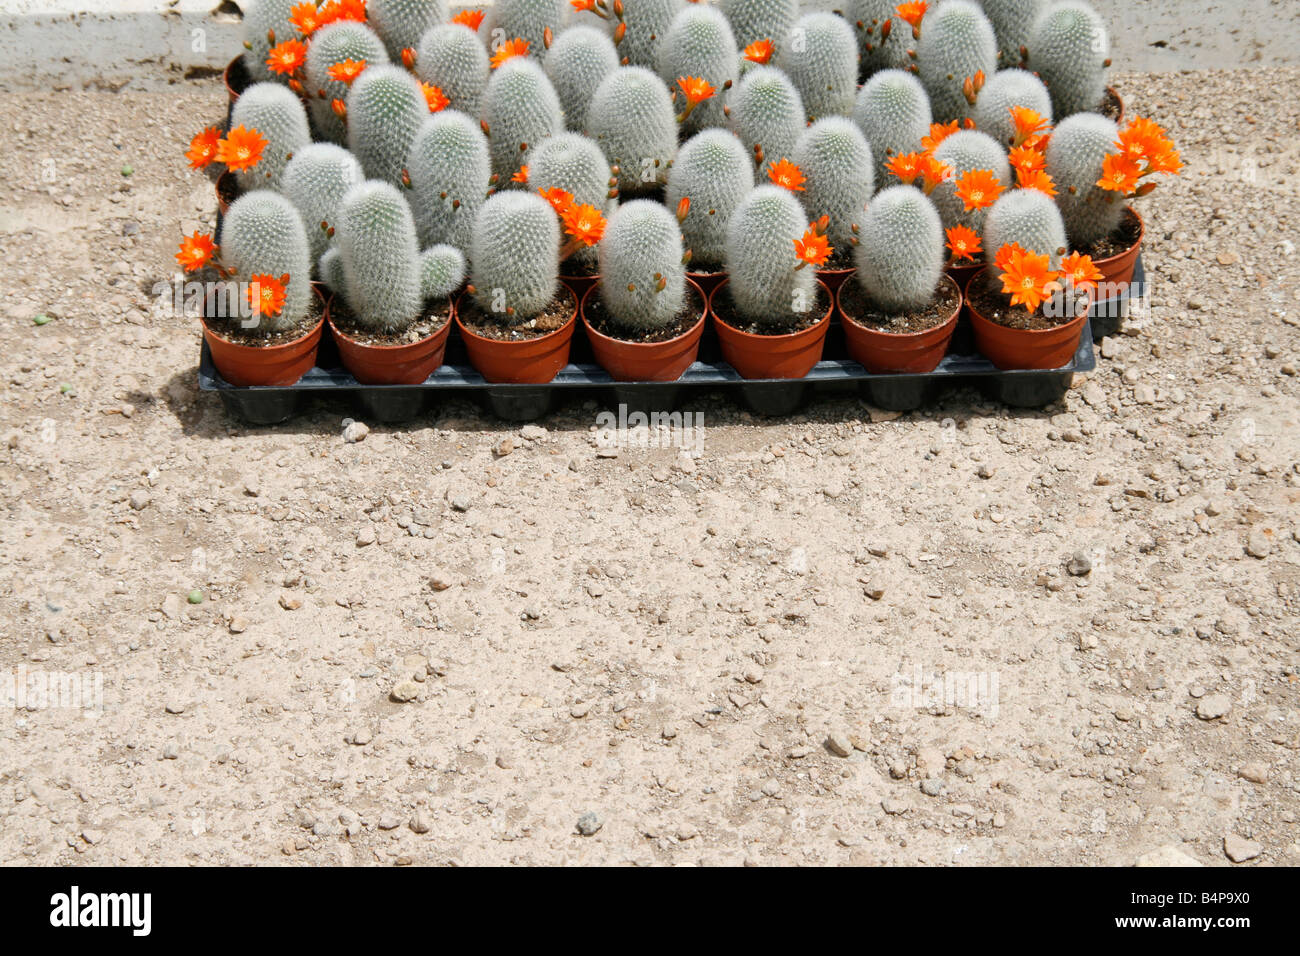 rebutia cactus with orange flowers Stock Photo